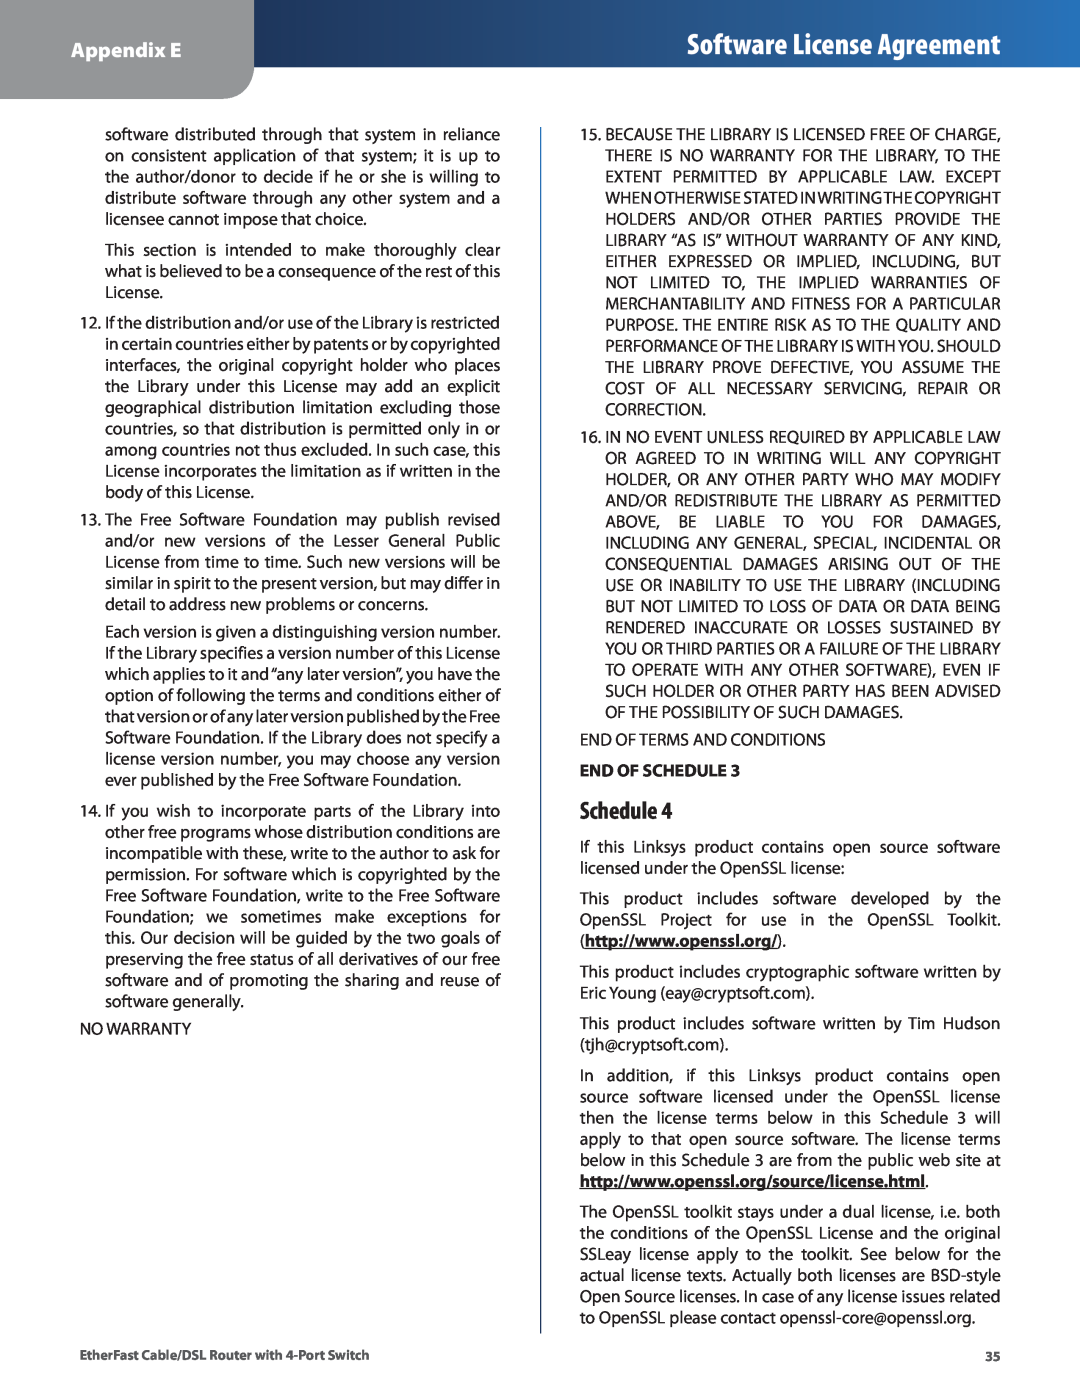 Honeywell HEMS II manual Software License Agreement, Schedule, Appendix E 